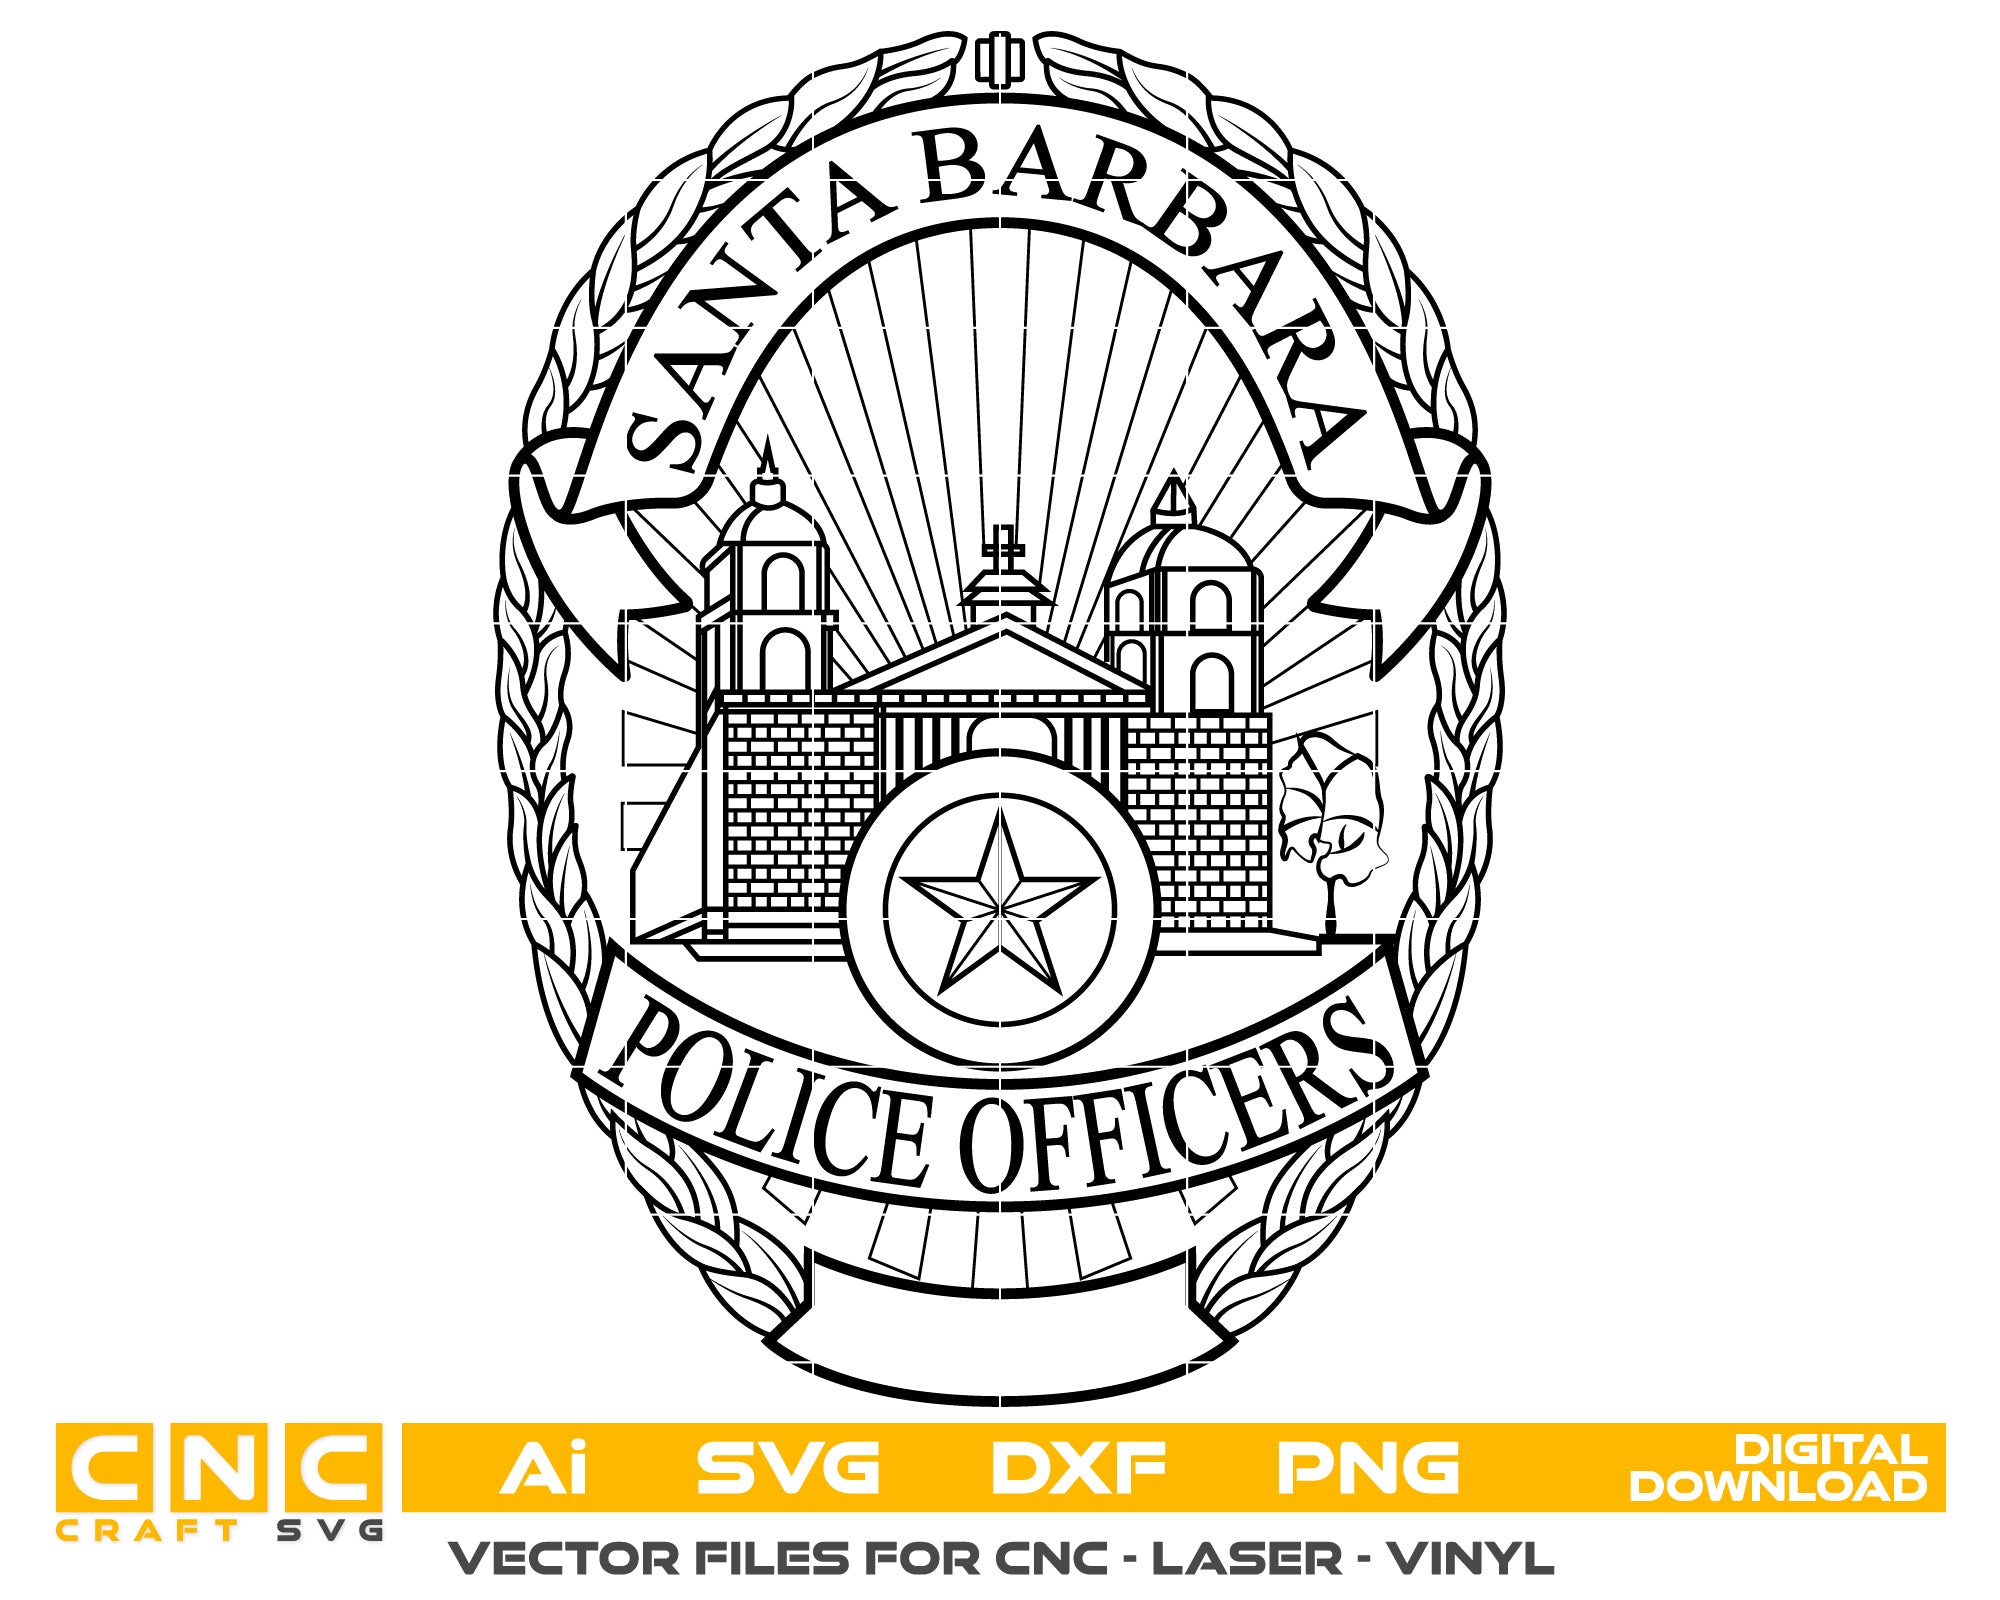 Santa Barbara Police Officer Badge vector art